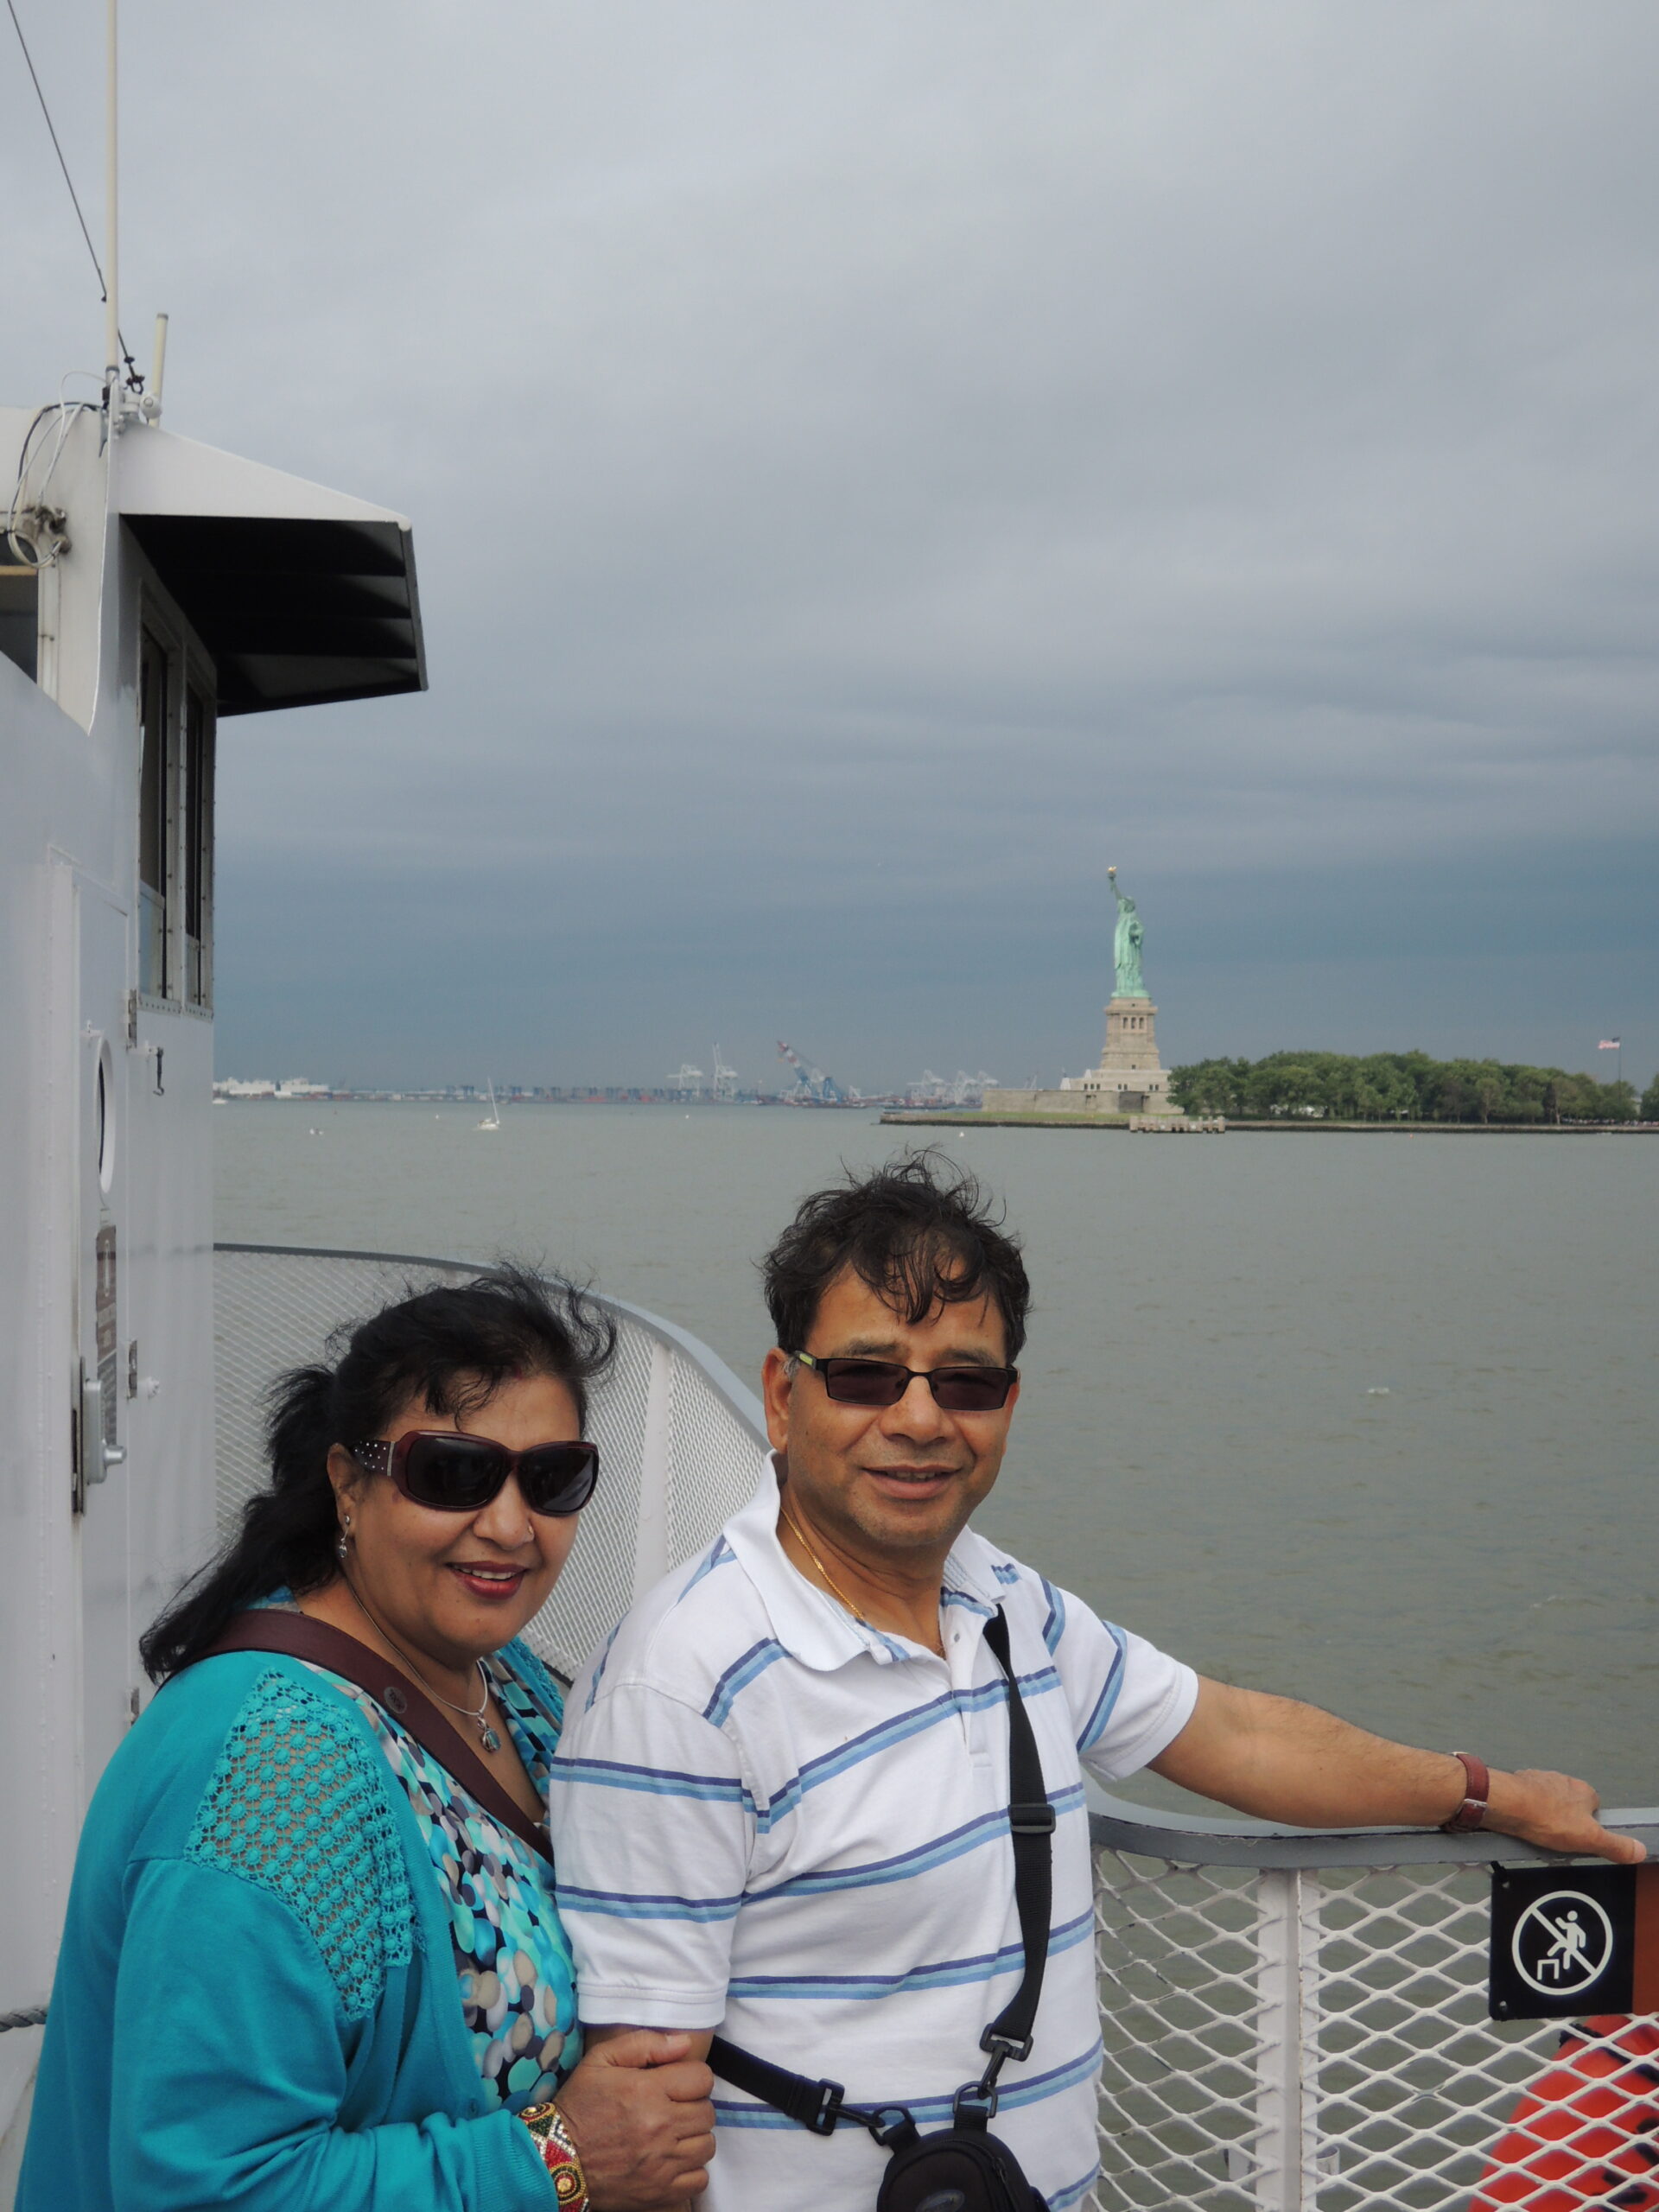 Mira and Kedar Adhikari on holiday in New York.